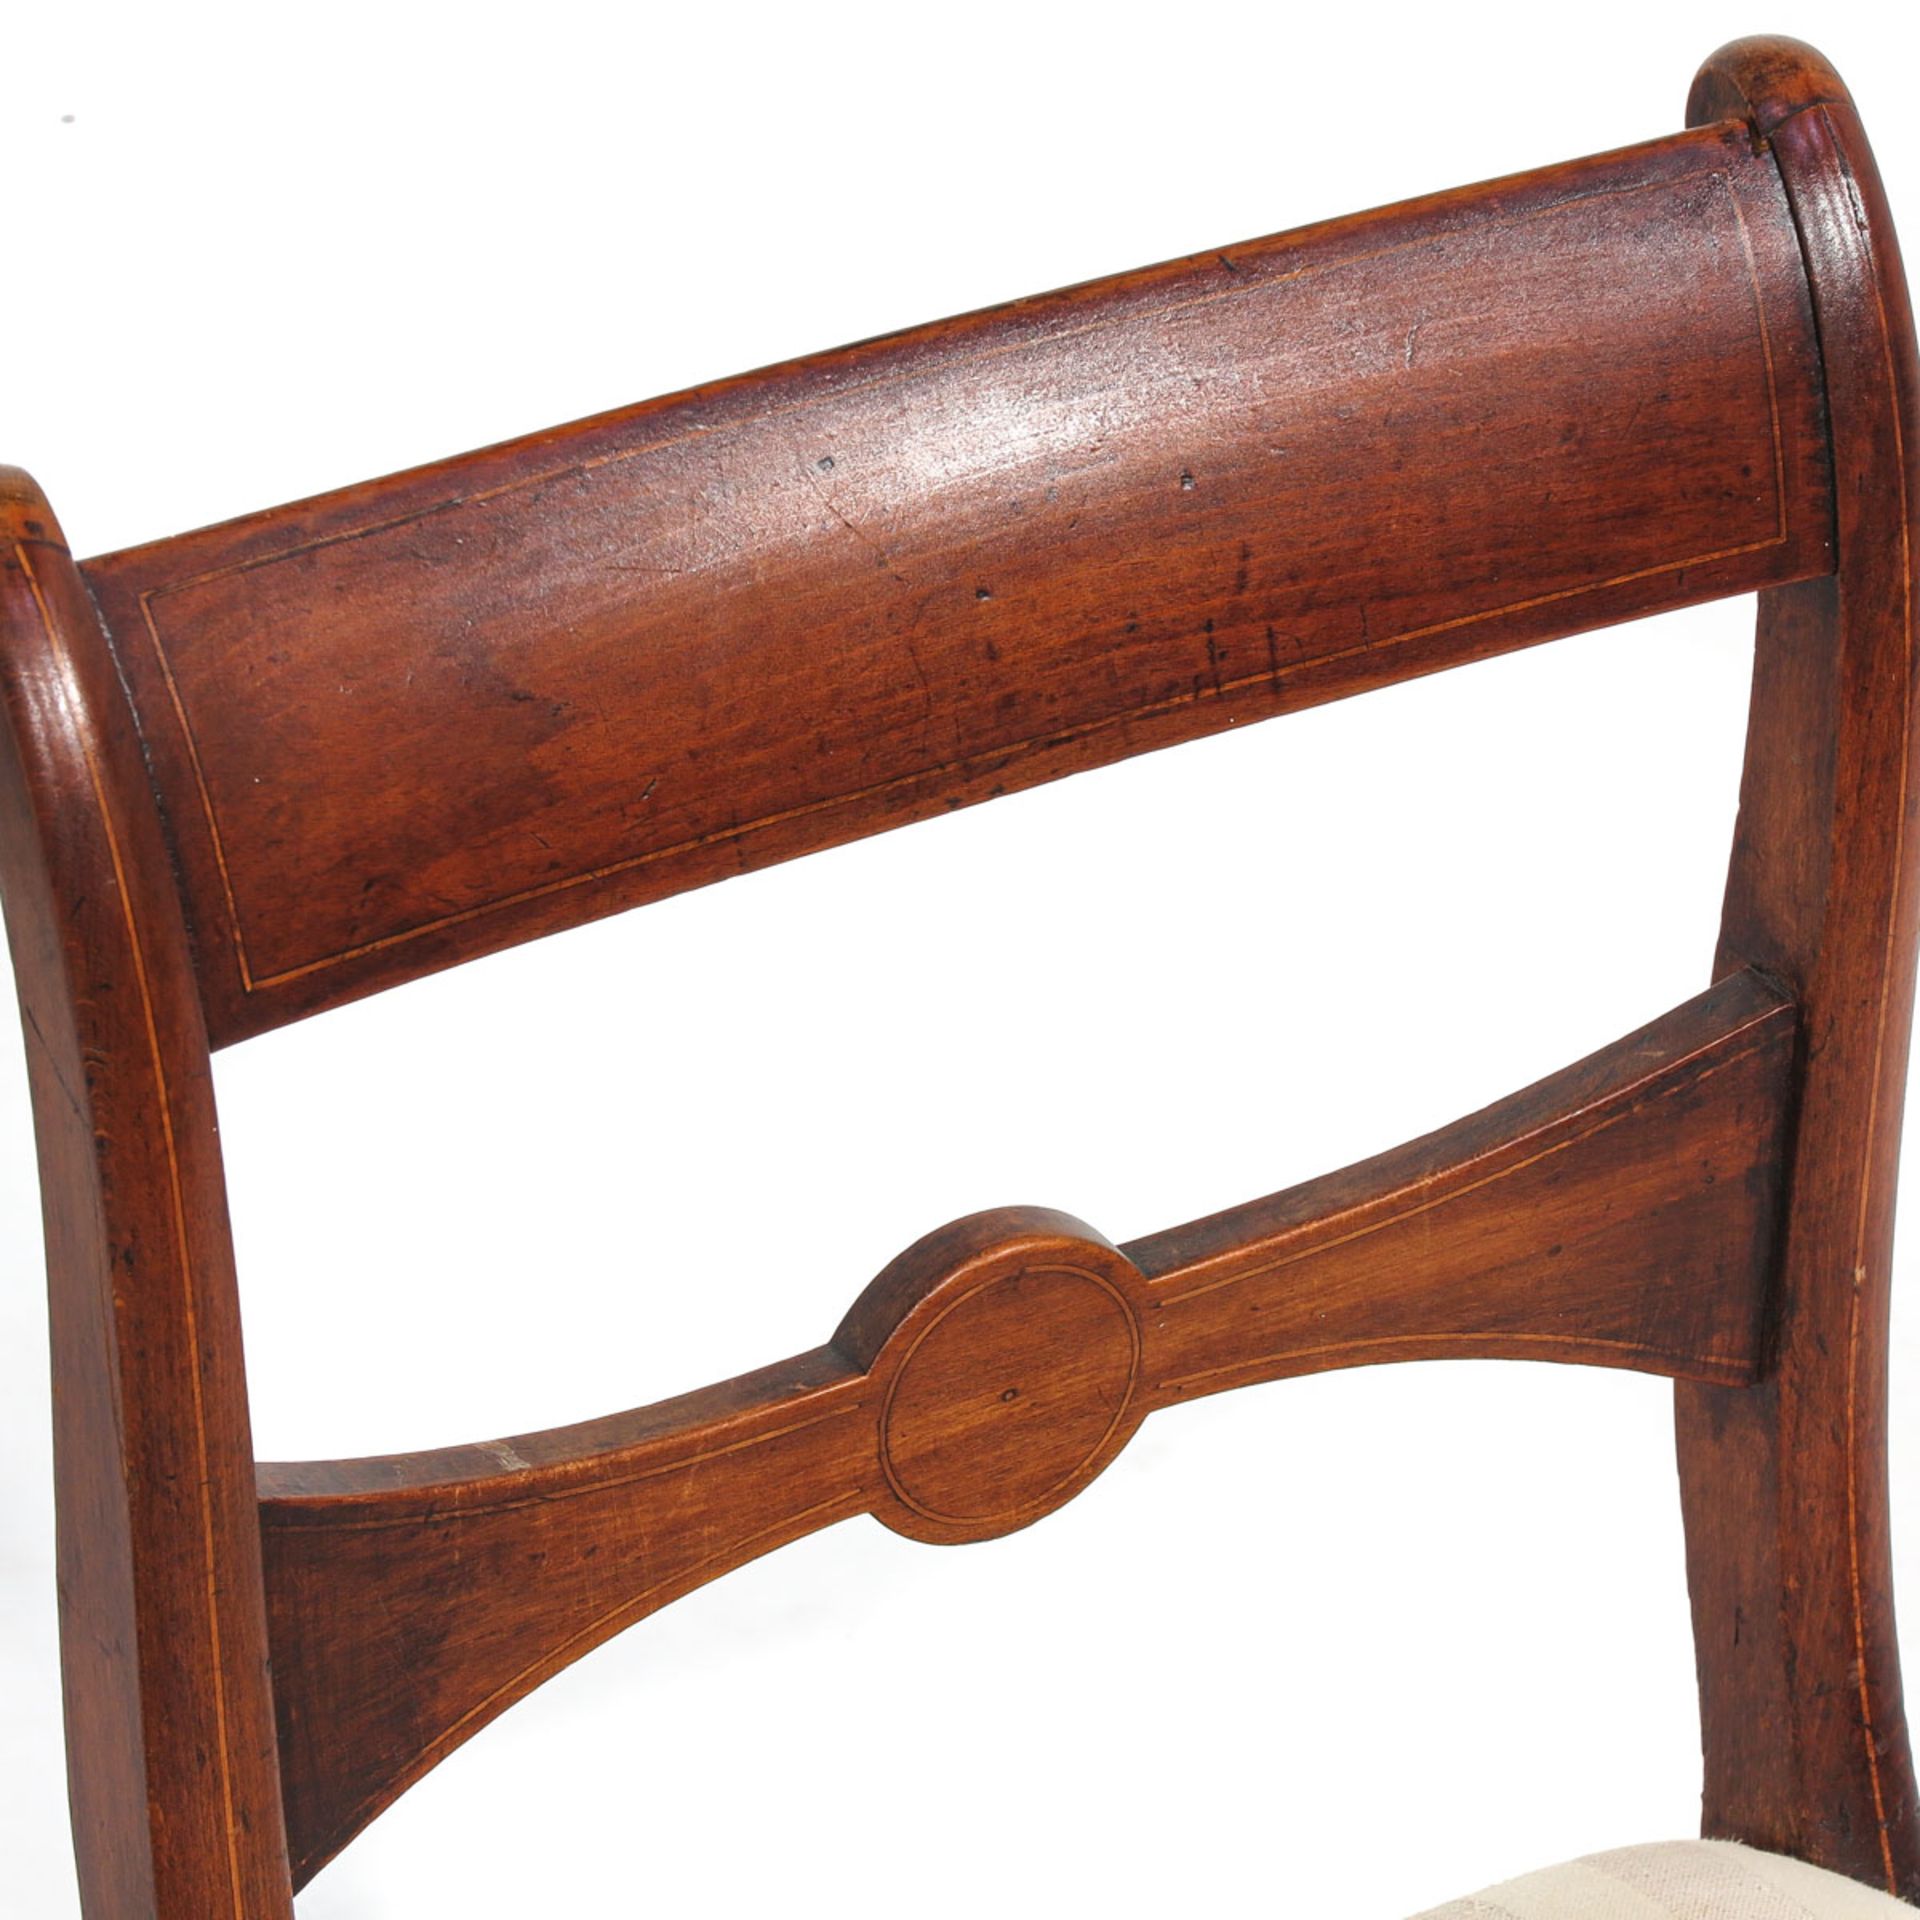 A Set of 6 19th Century English Mahogany Chairs - Image 9 of 9